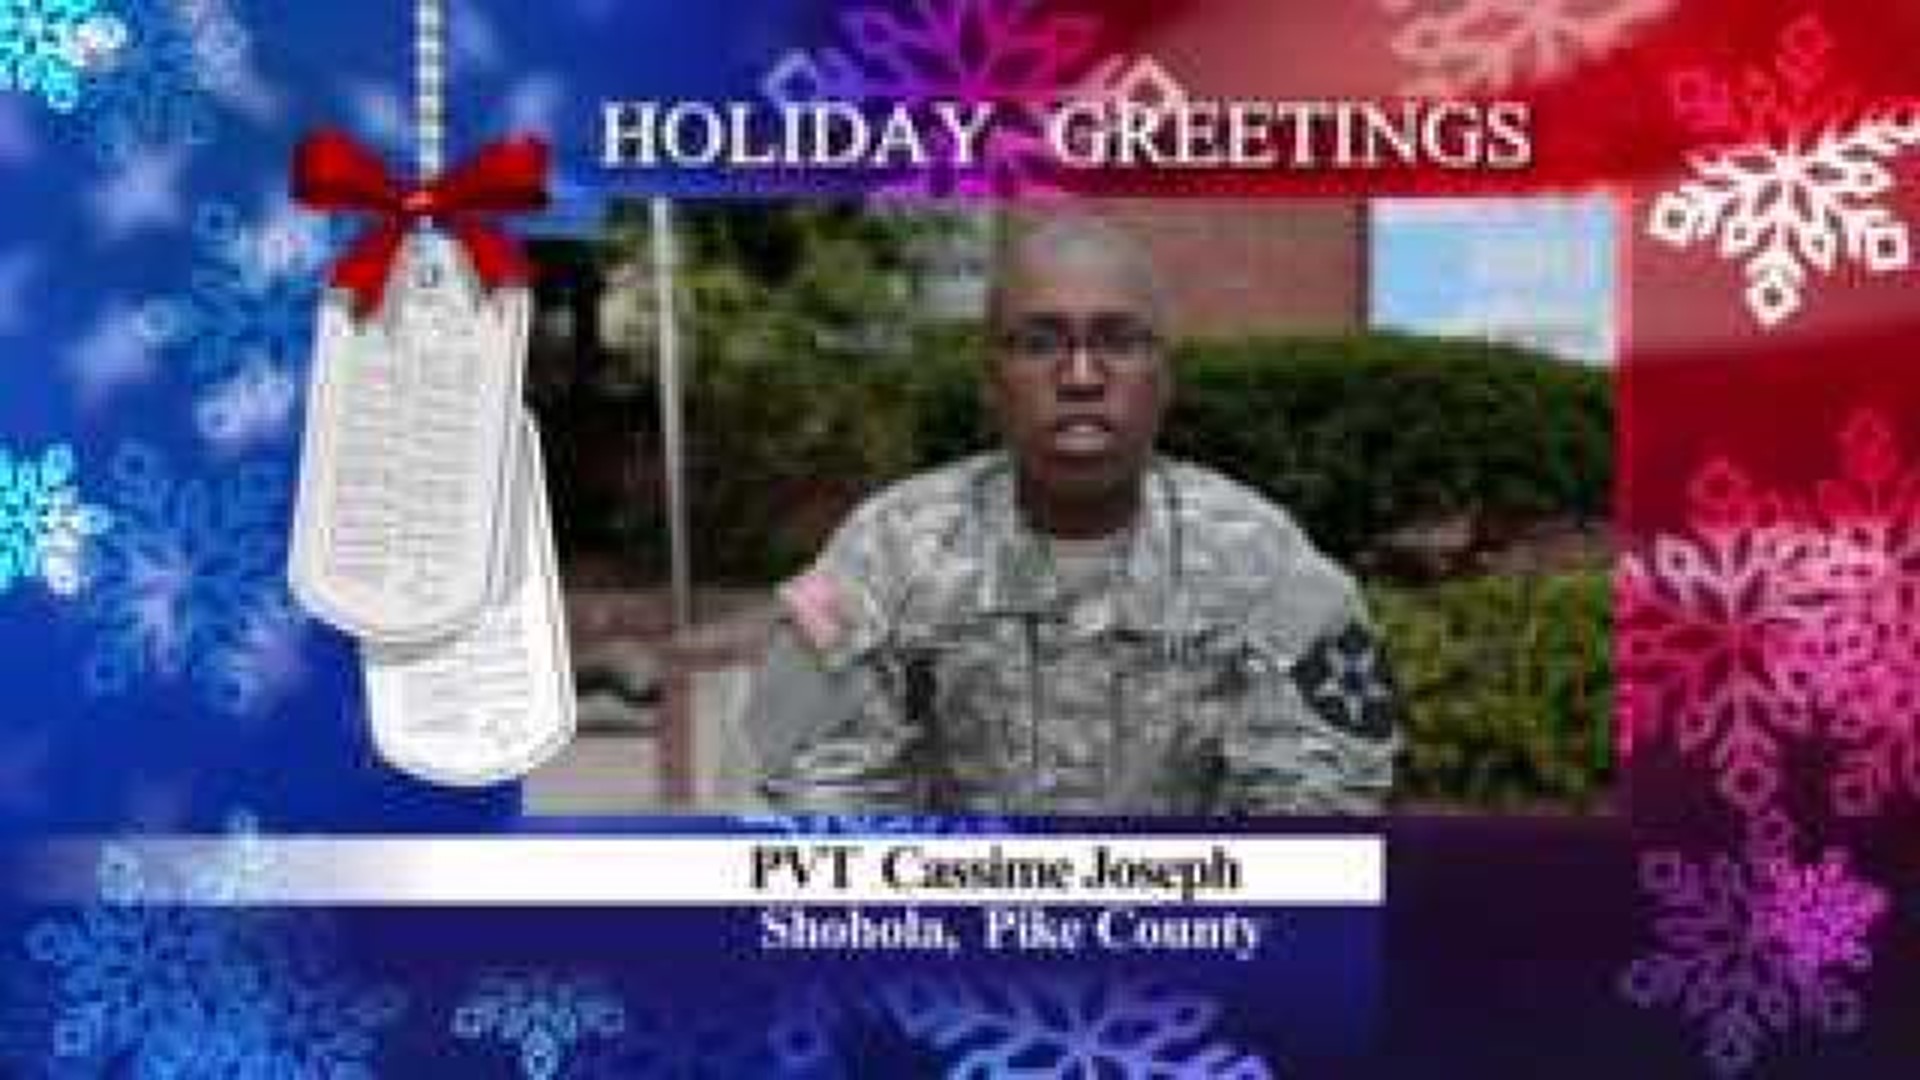 Military Greeting: PVT Cassime Joseph